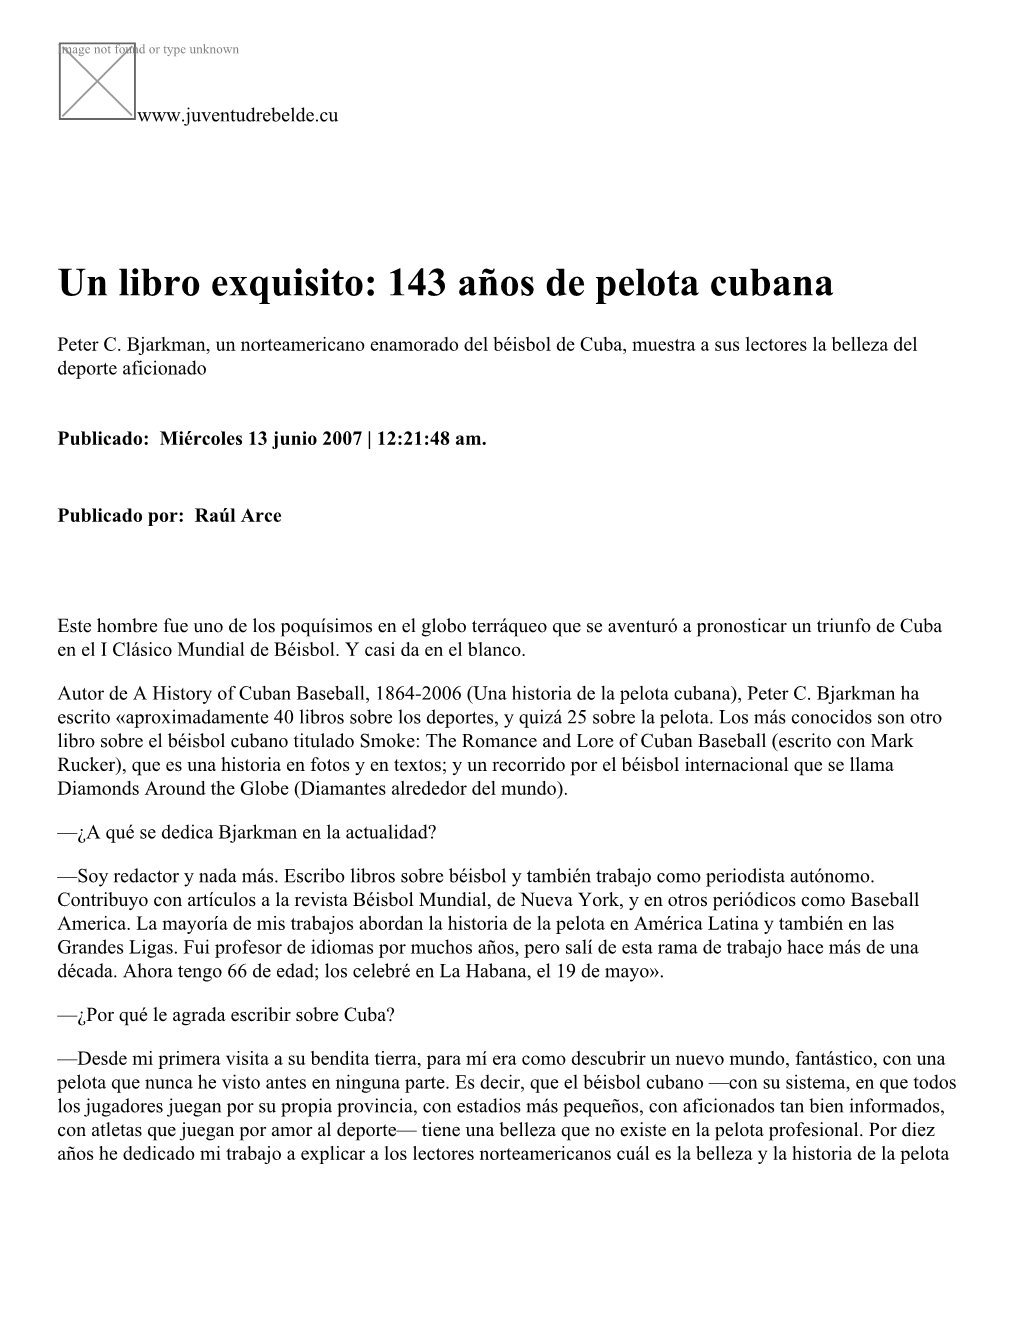 Un Libro Exquisito: 143 Años De Pelota Cubana